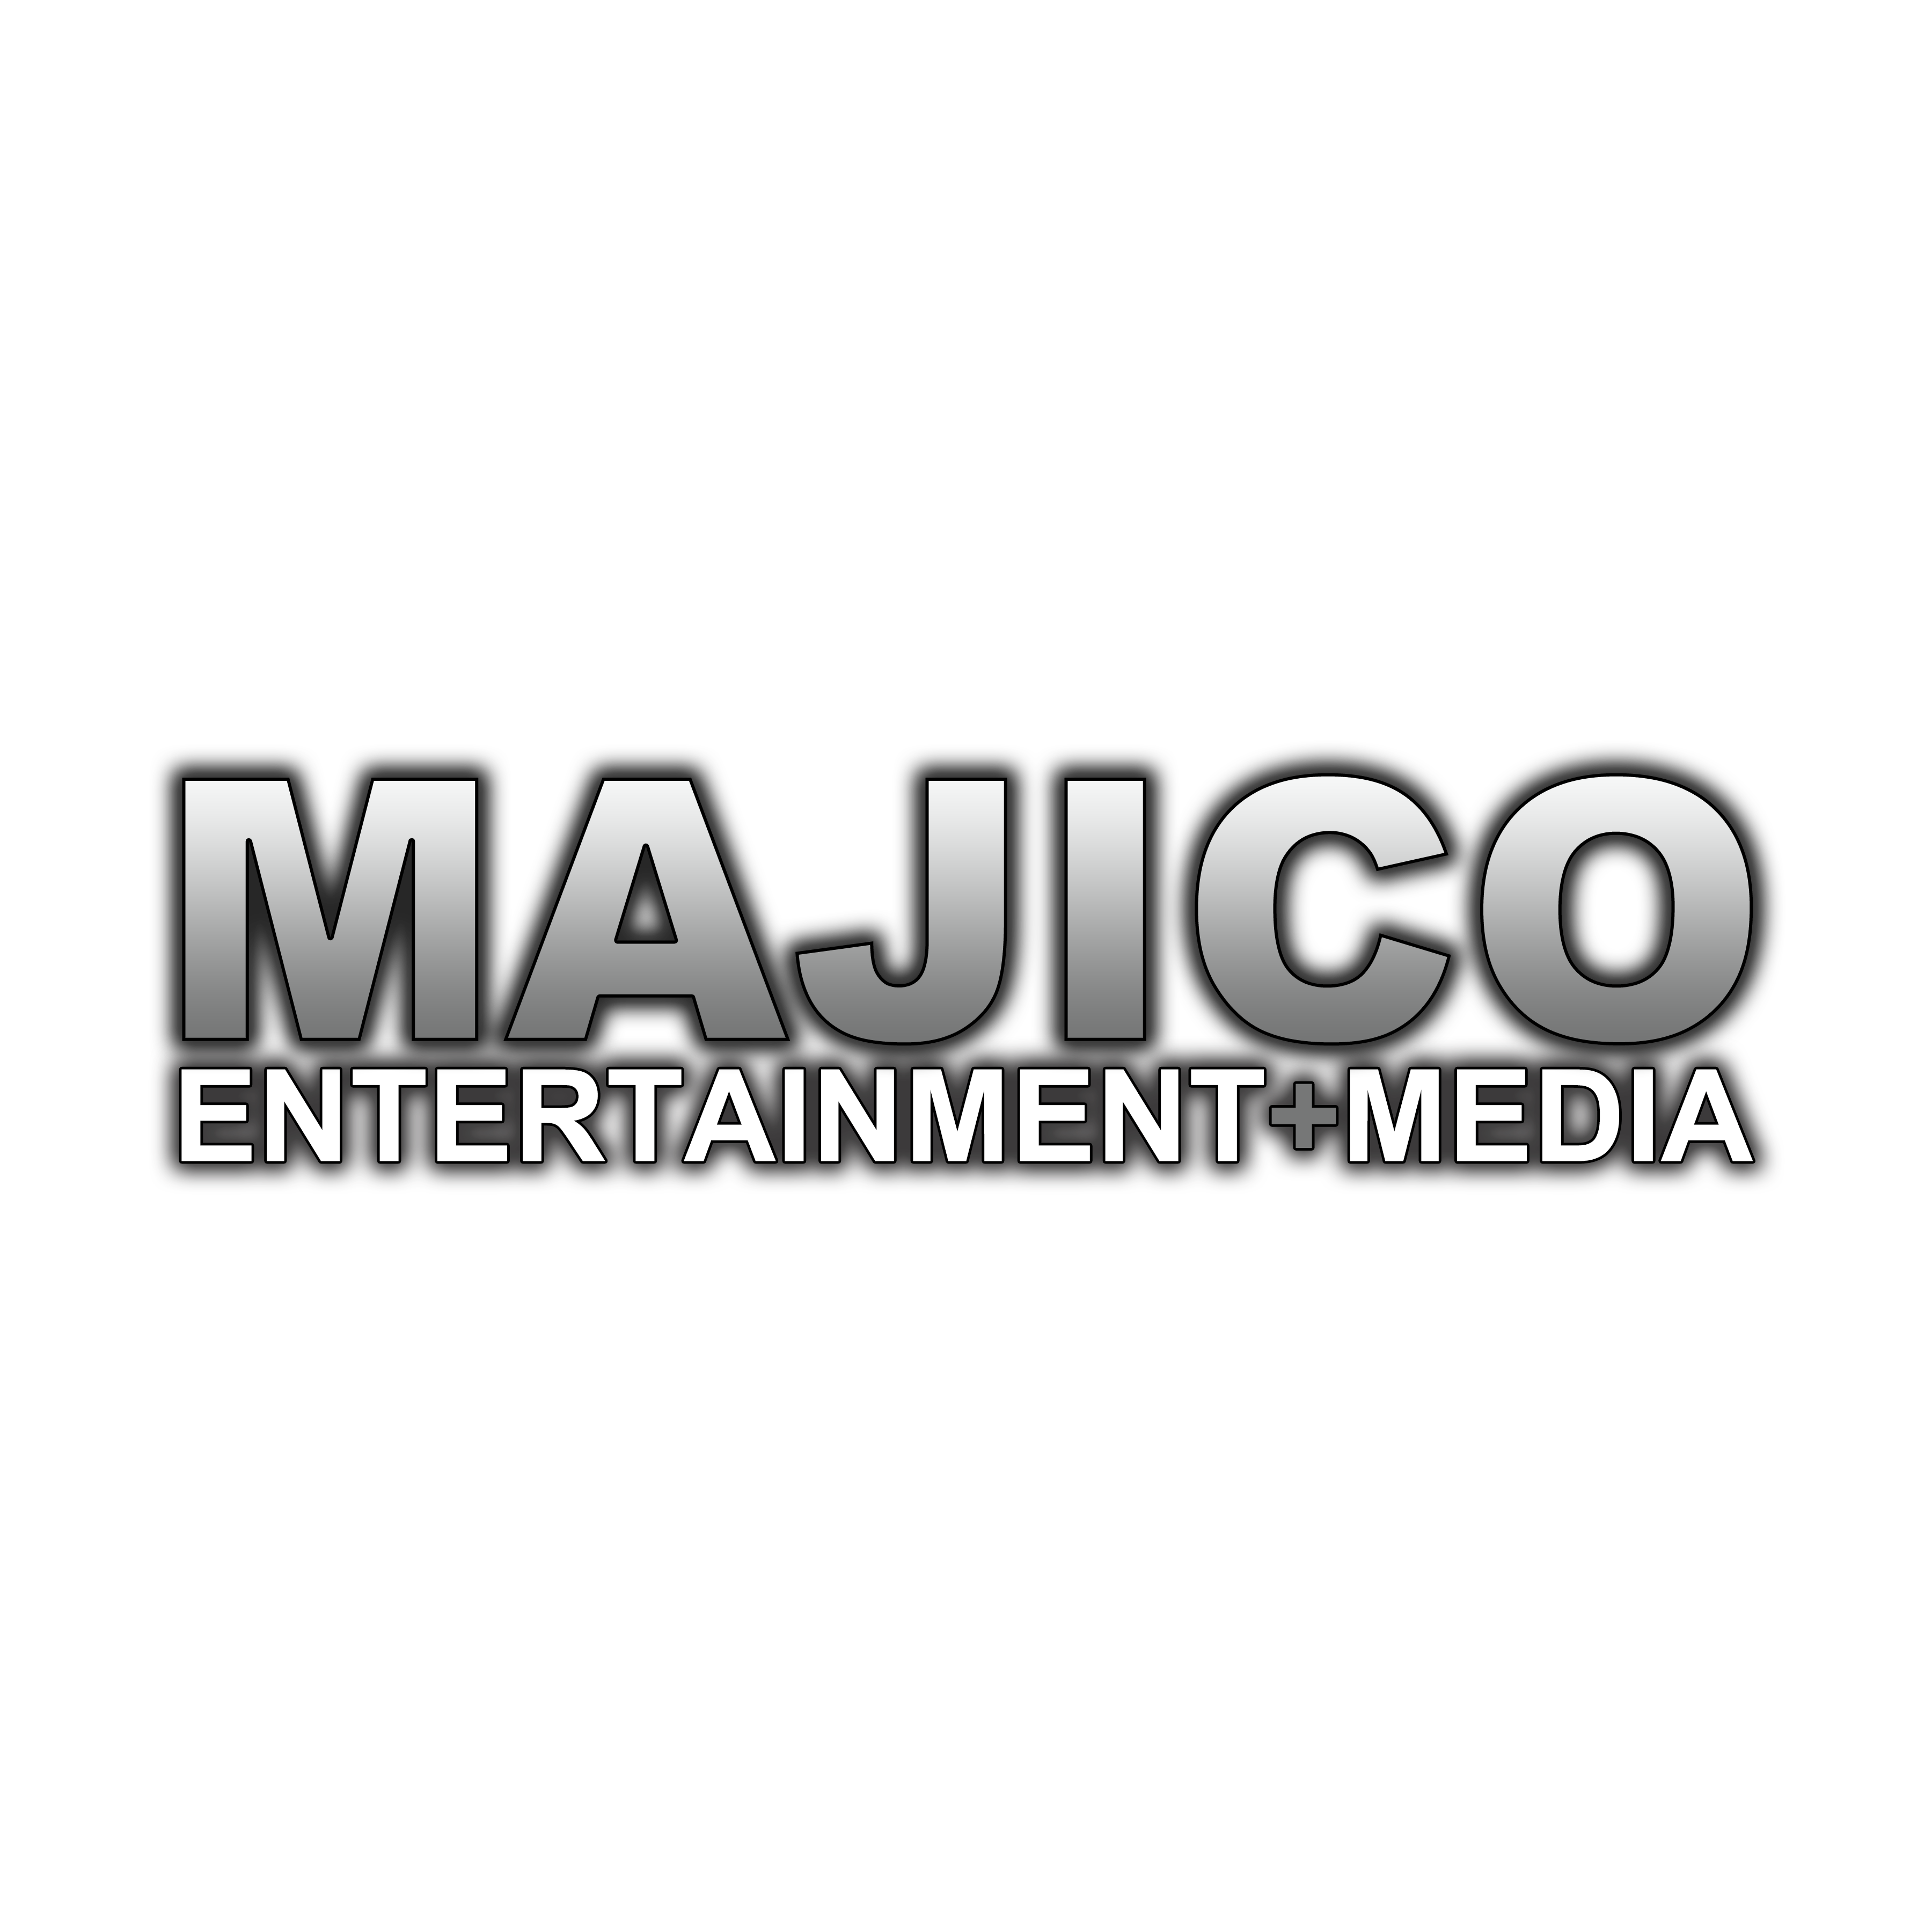 Majico Entertainment + Media